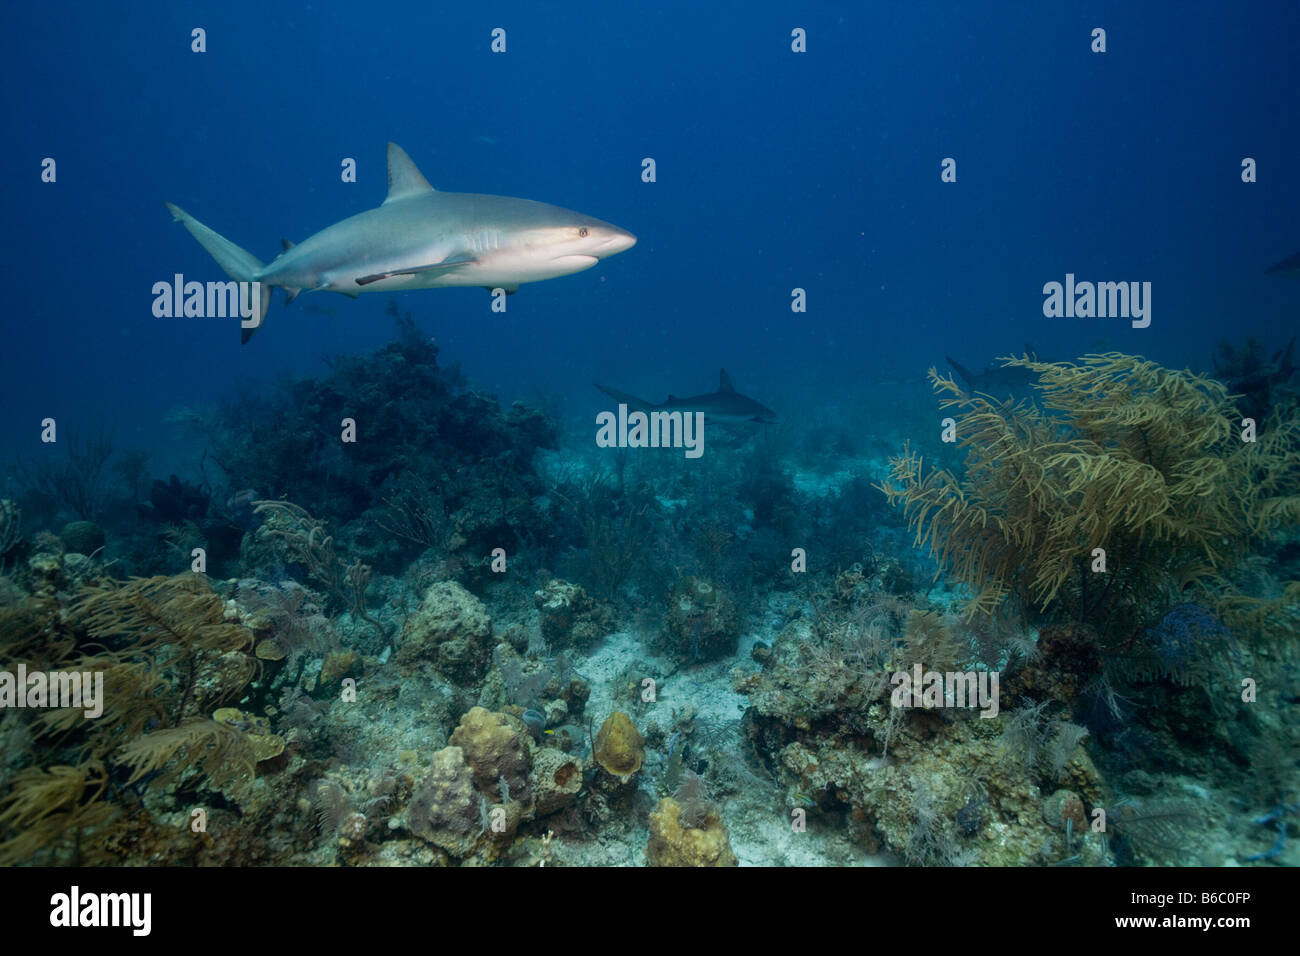 Bahamas New Providence Island Karibik Riff Haie Carcharhinus Perezi Schwimmen im karibischen Meer Stockfoto